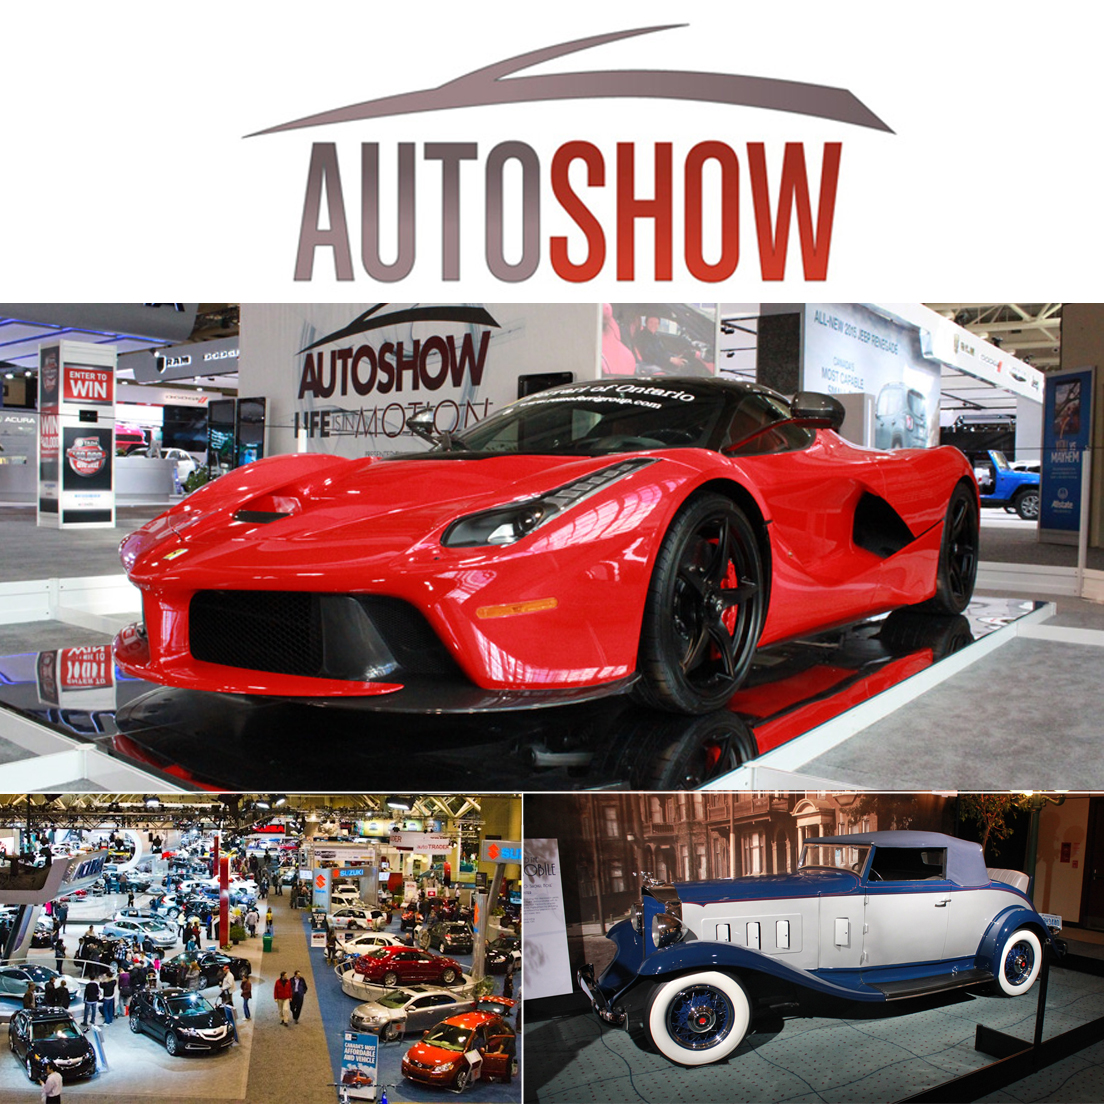 International Auto Show